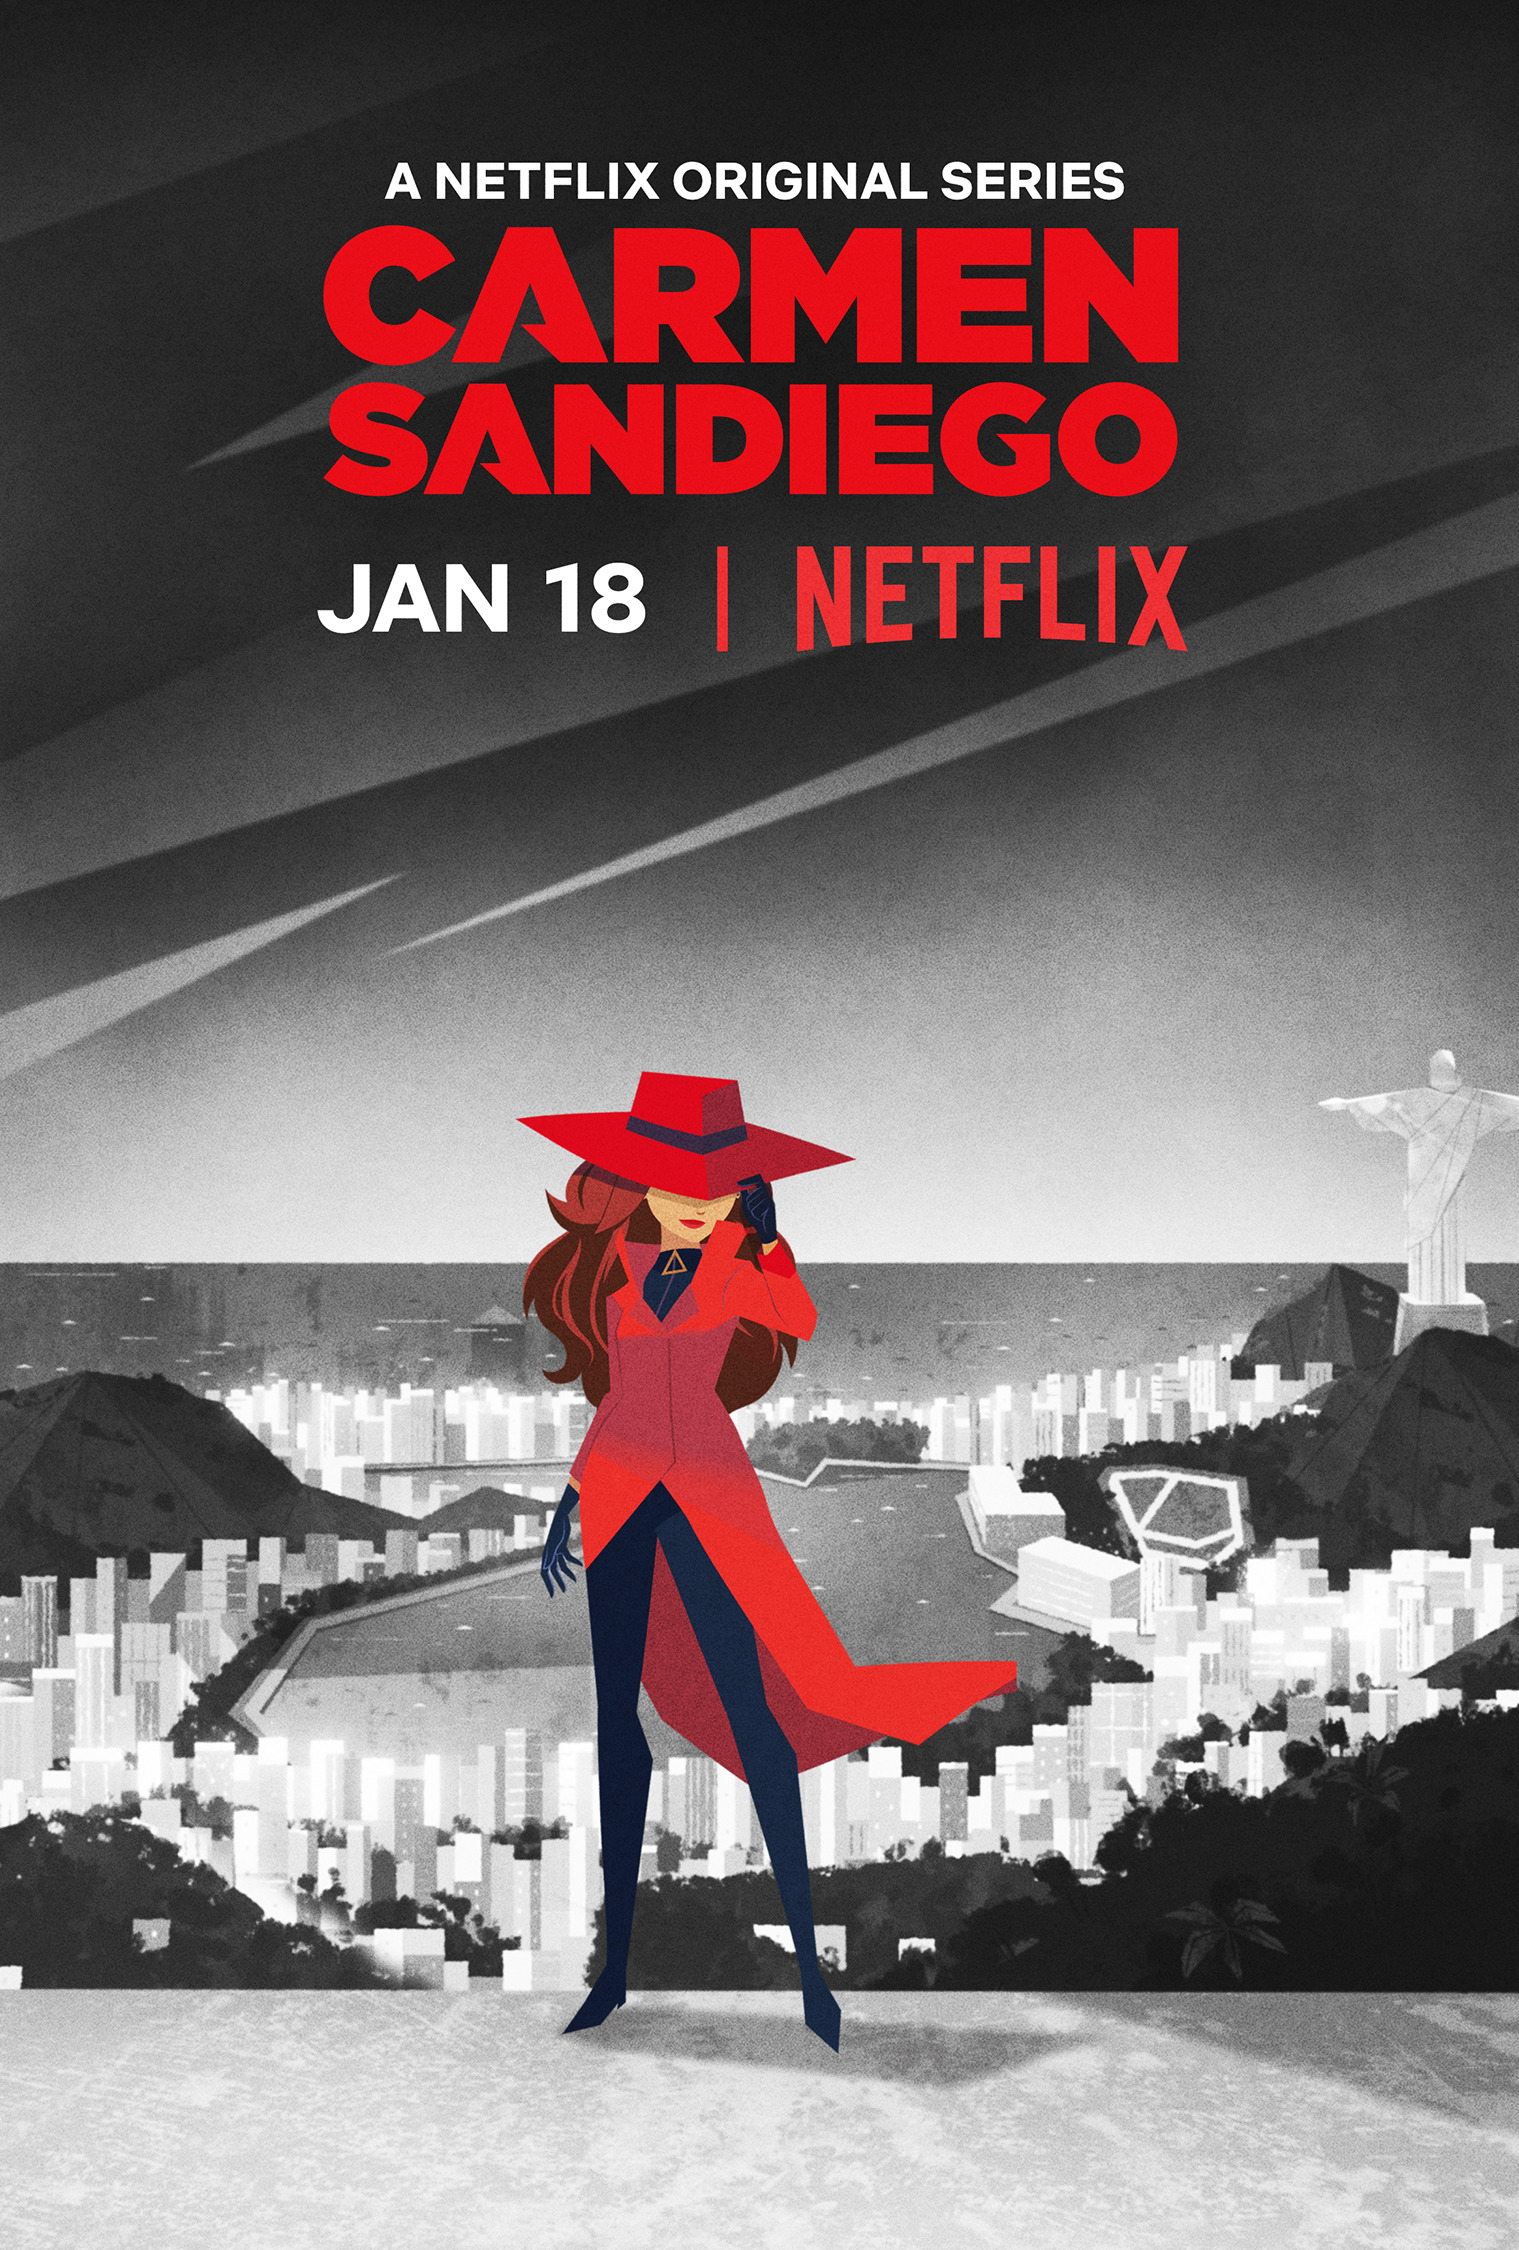 Mega Sized TV Poster Image for Carmen Sandiego (#2 of 3)